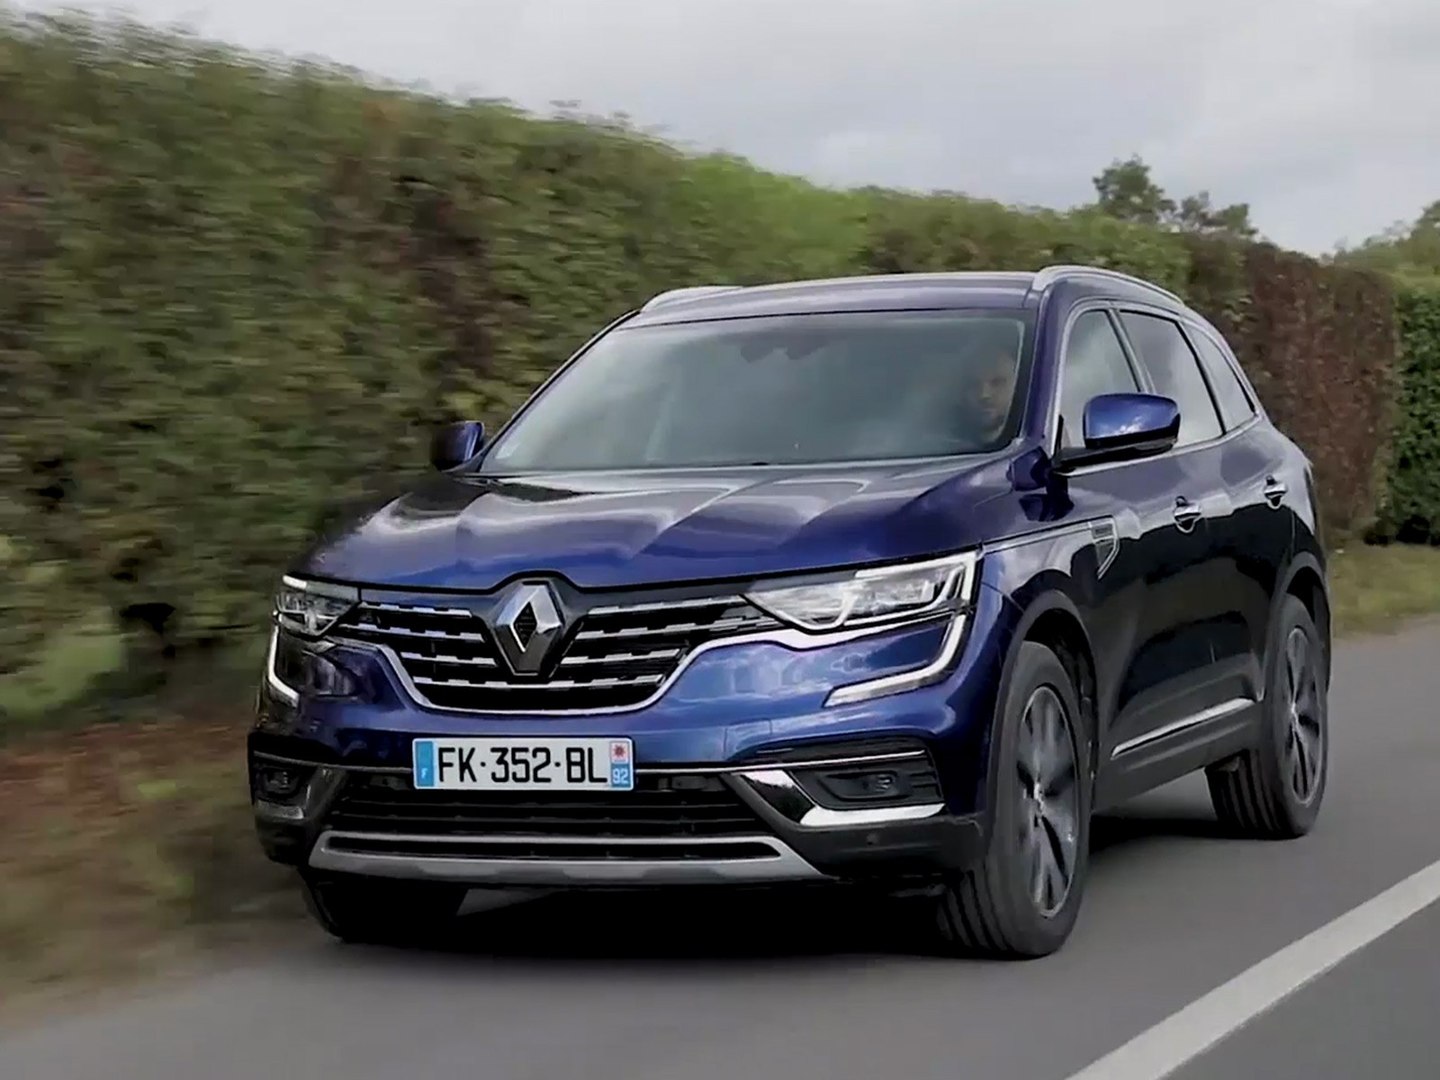 Essai Renault Koleos 1.7 BluedCi 150 2019 - Vidéo Dailymotion